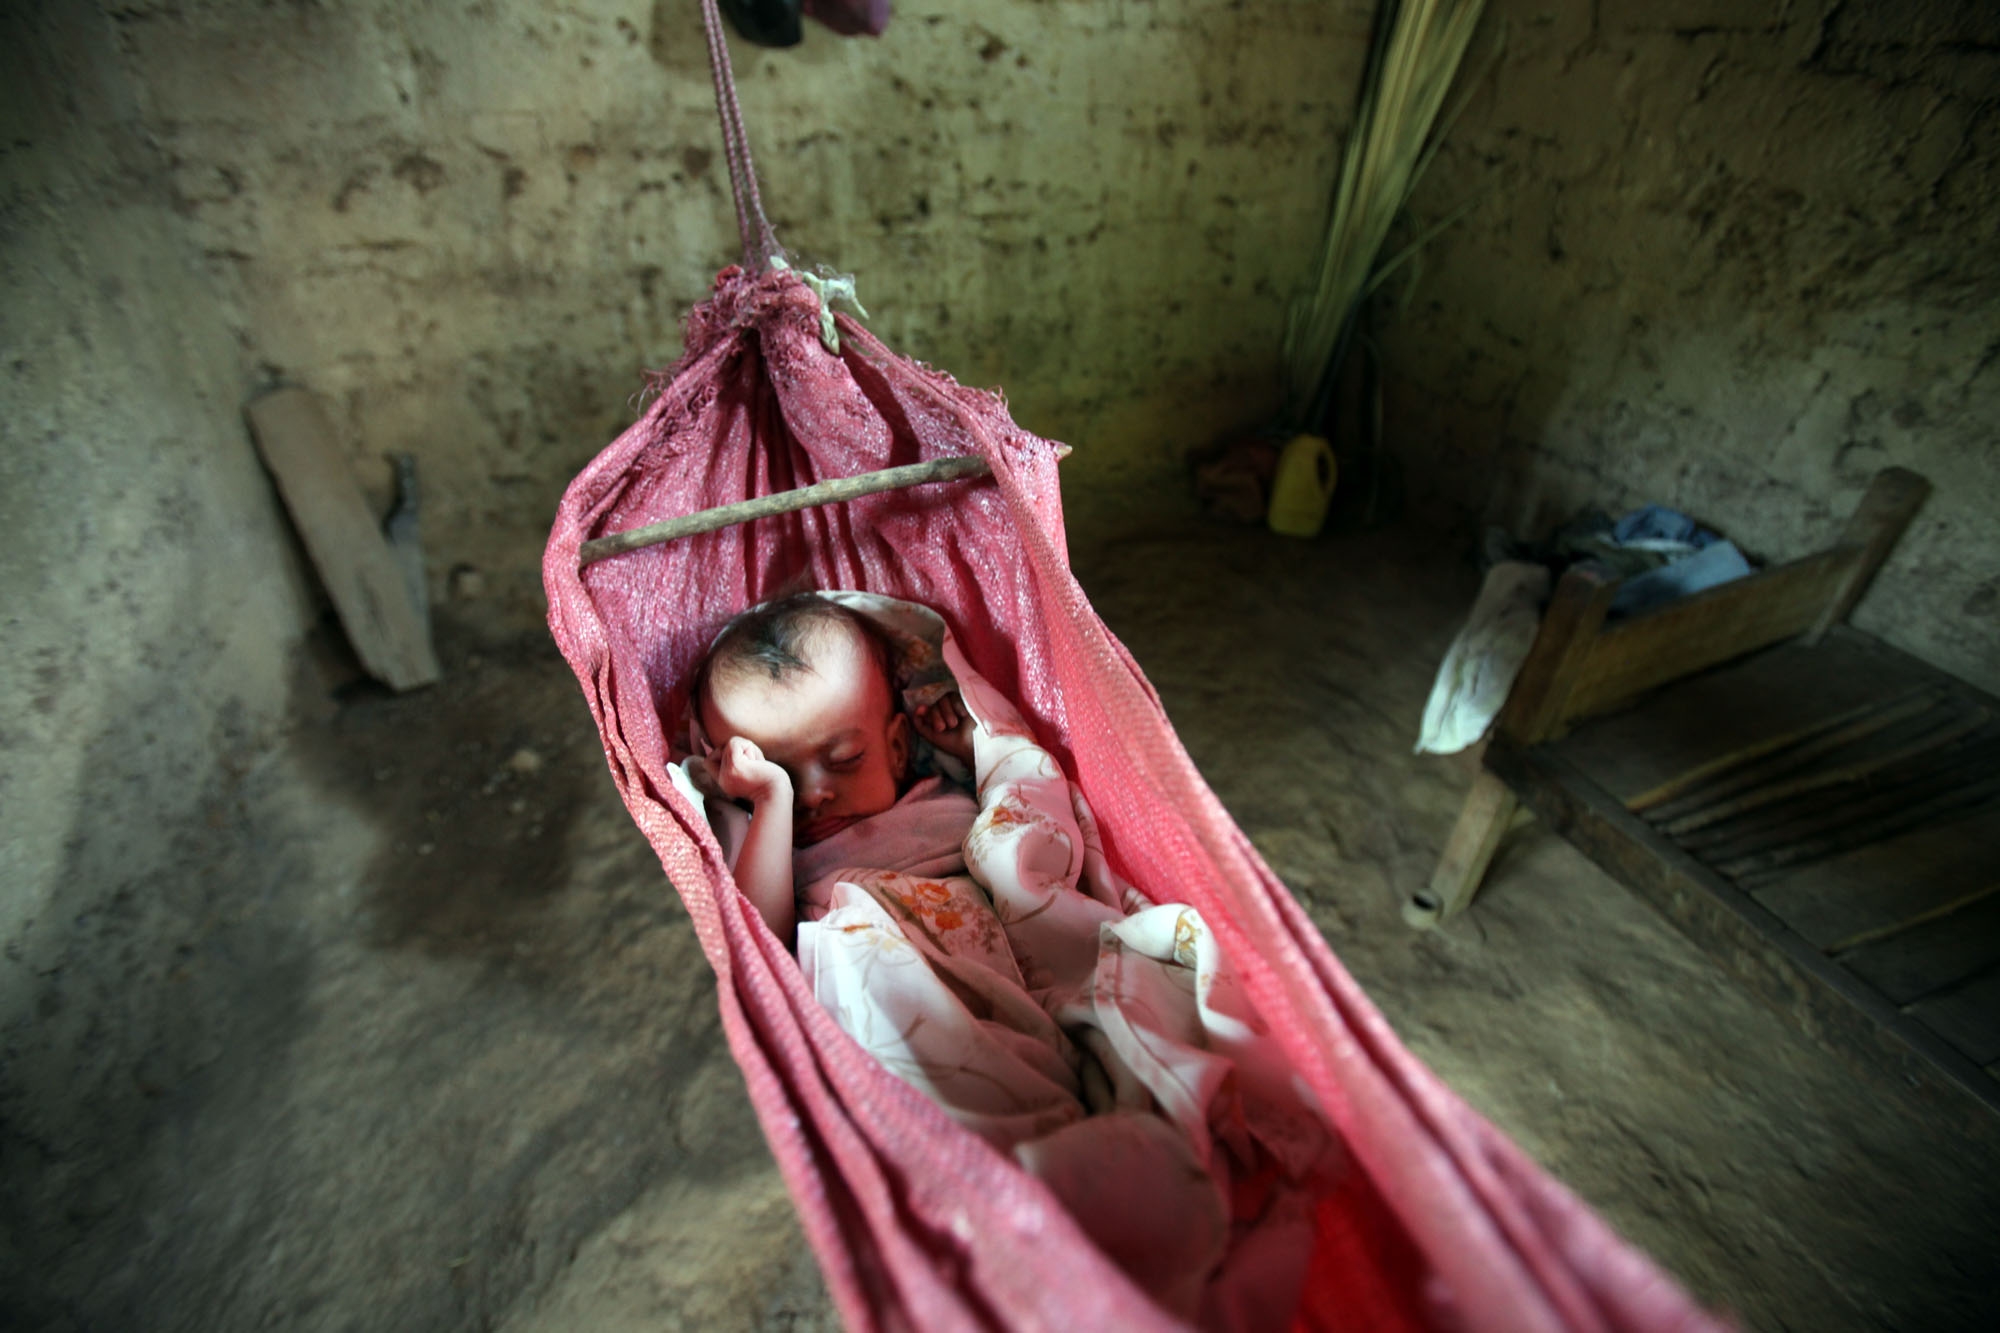 A baby sleeps in a precarious hammock